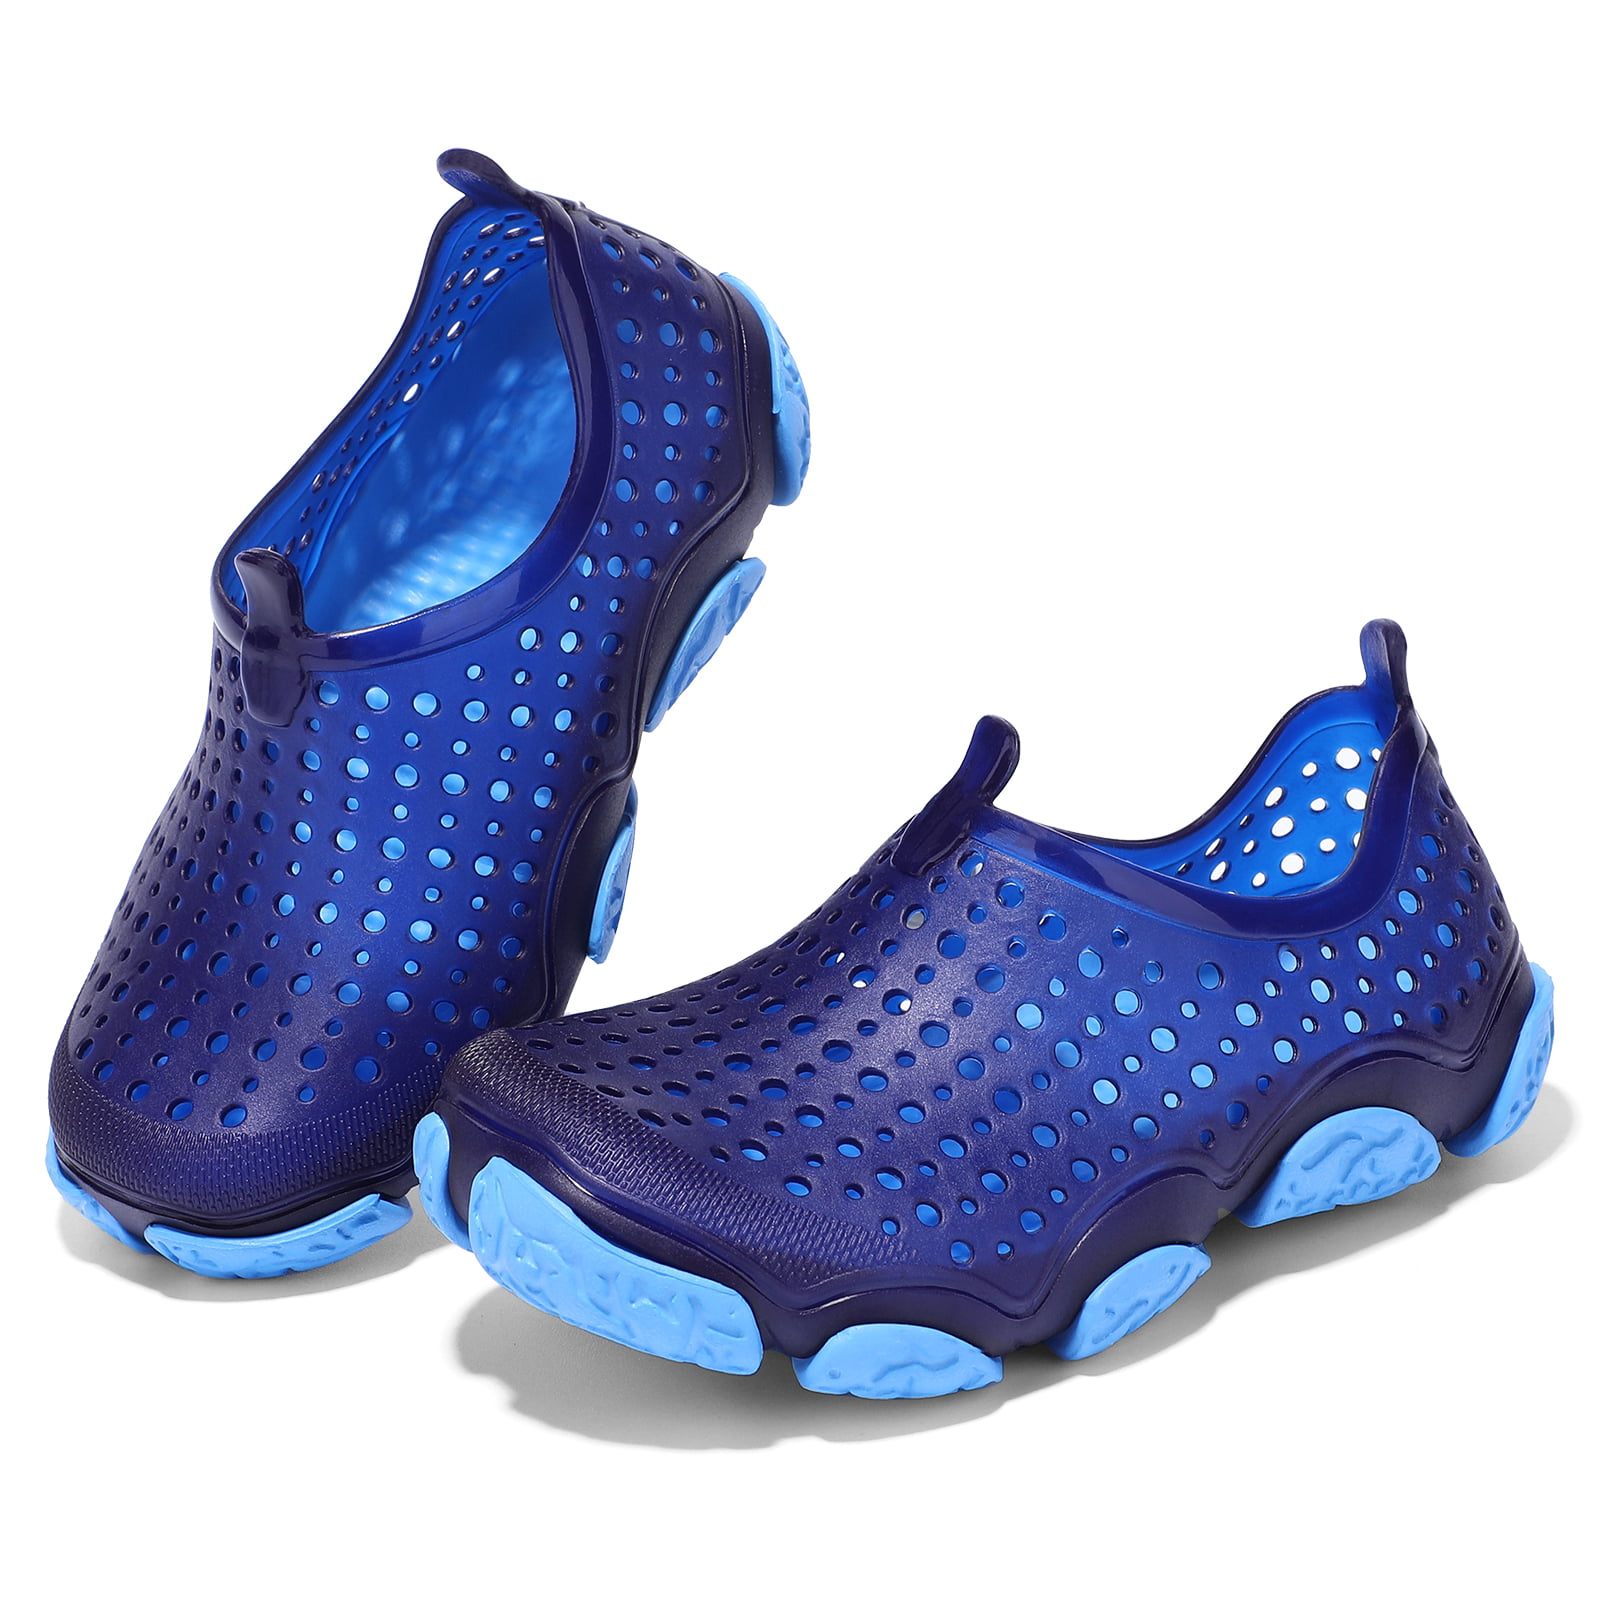 hiitave Boys Water Shoes Kids Sandals Slip on Clogs for Garden Beach Swim  Pool Aqua Summer Blue/Green 2-3 M US Little Kid 